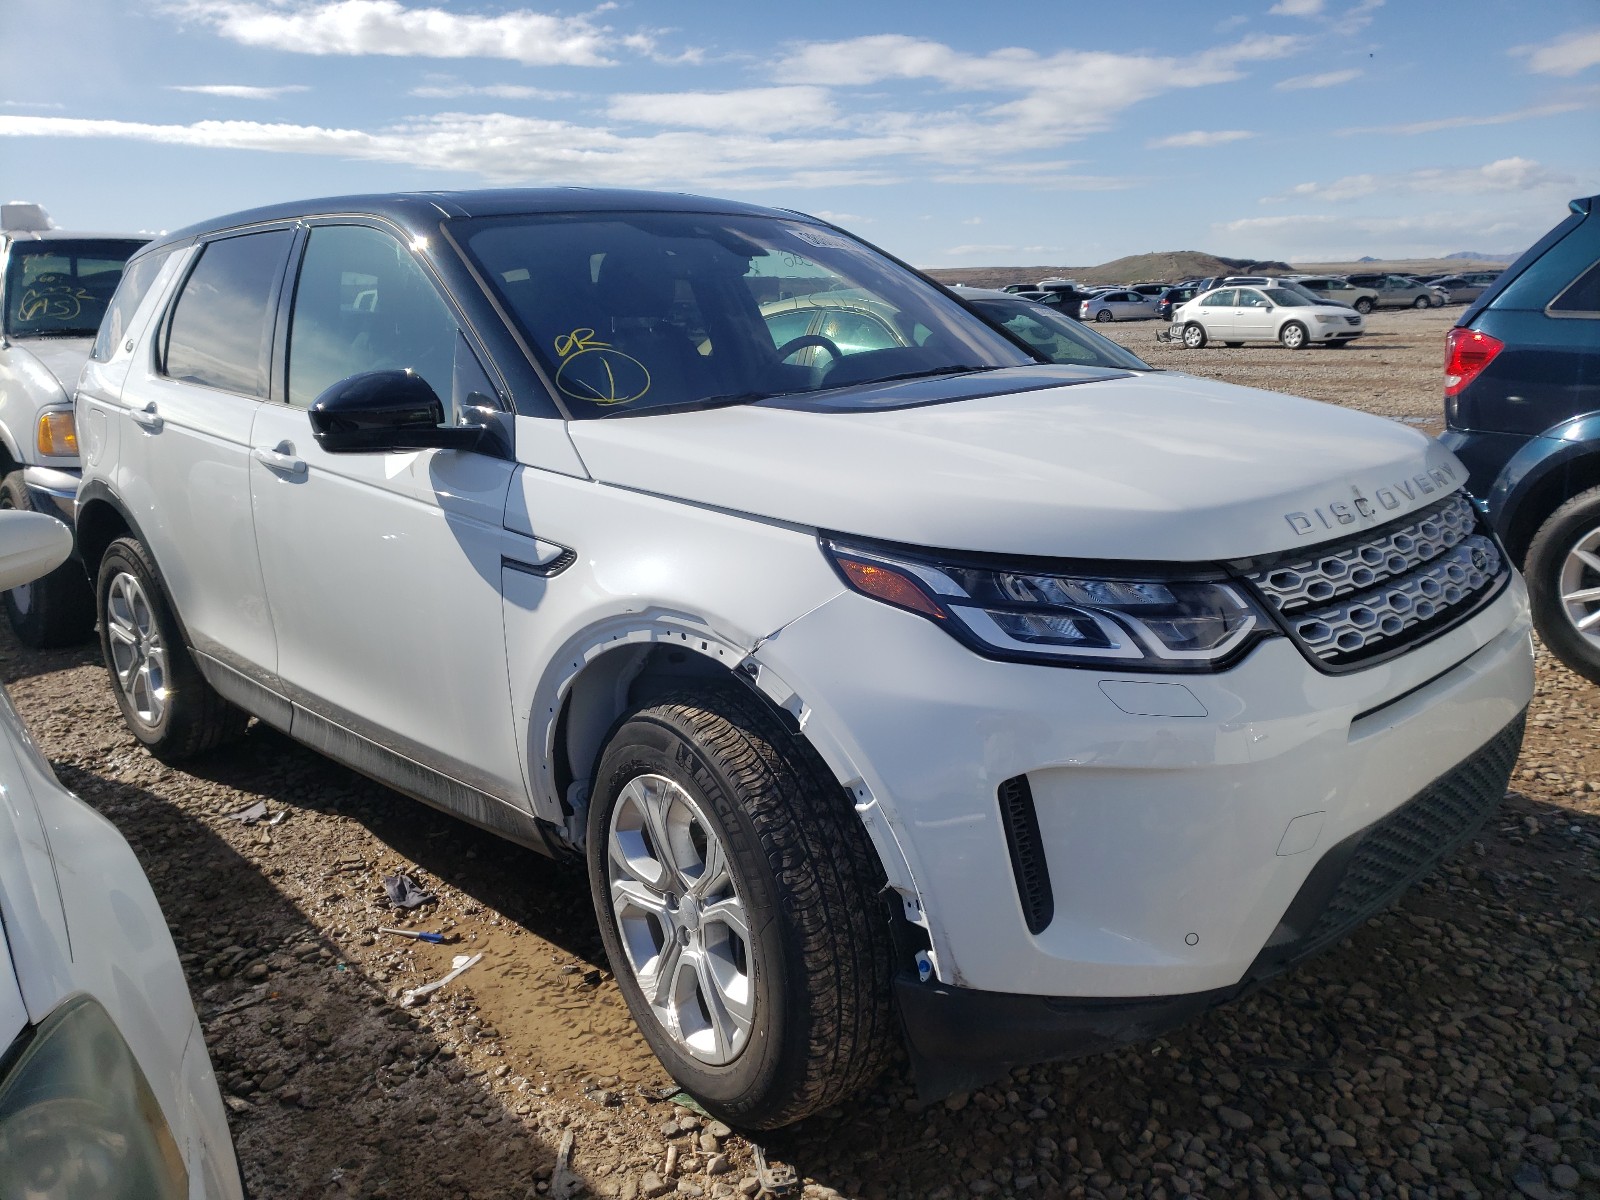 Land Rover Discovery 2020 клиренс. Вин дискавери